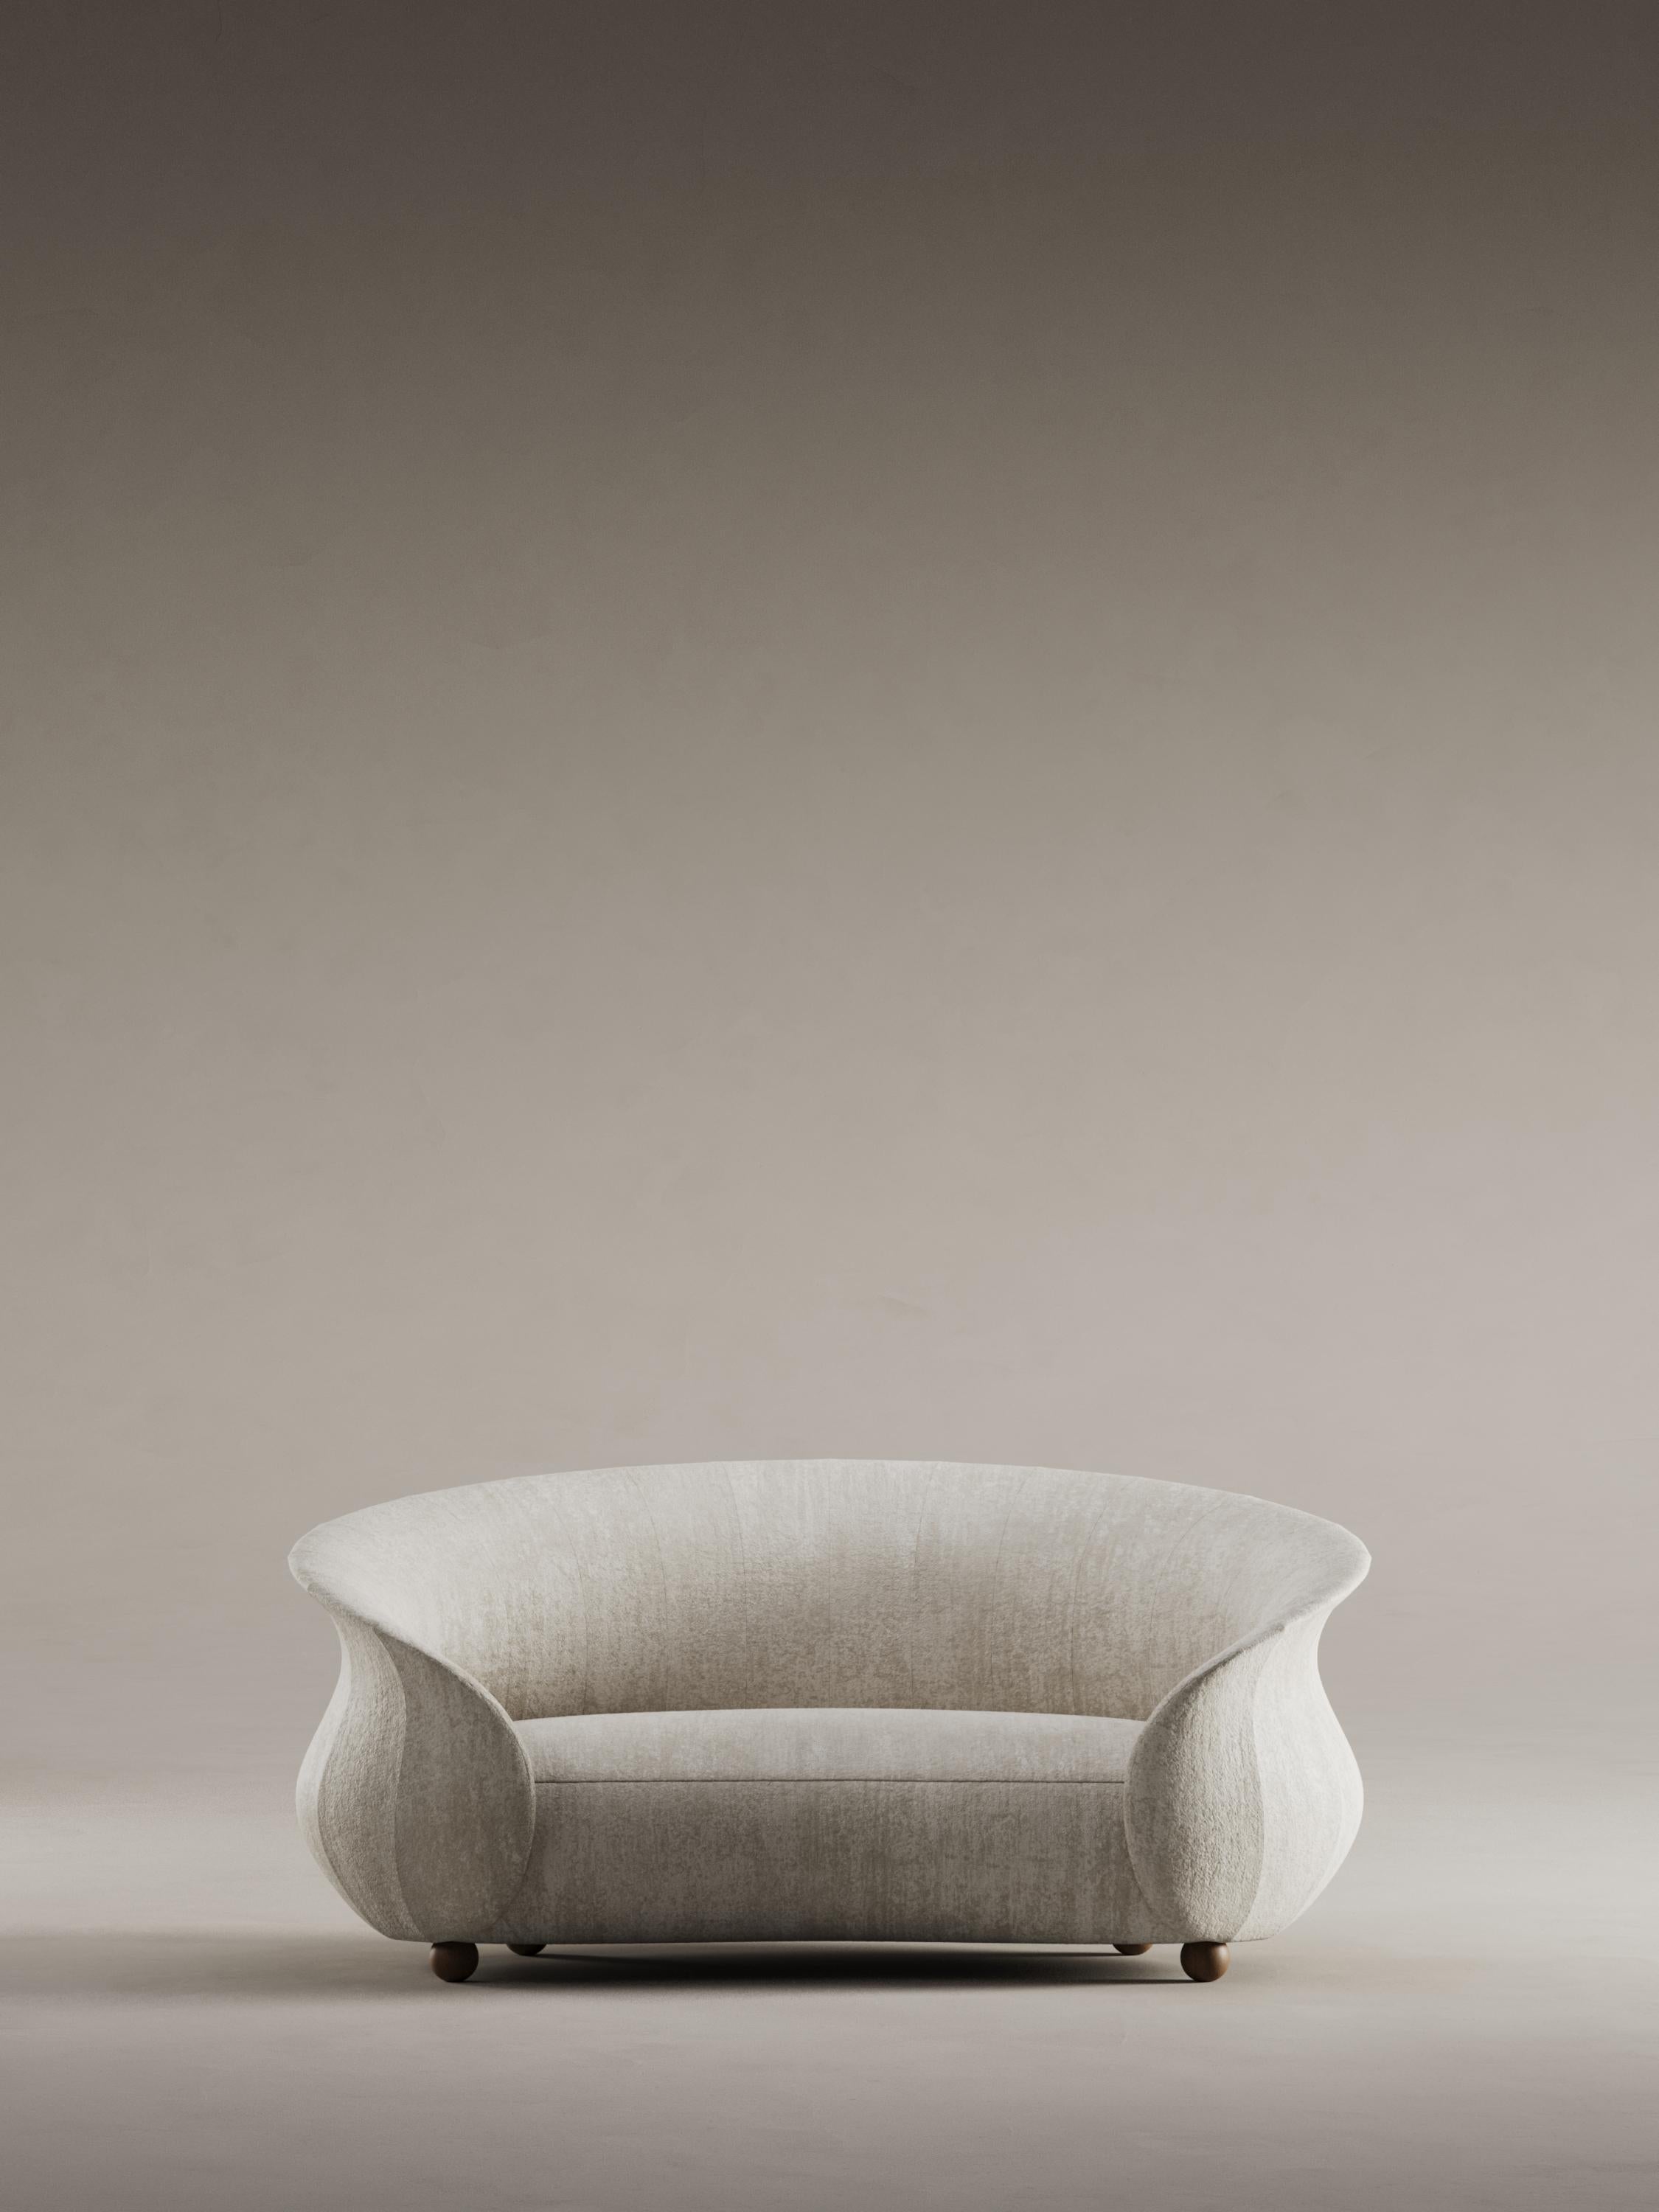 European Contemporary Sculptural Mid Century Made to Order Verona Sofa For Sale